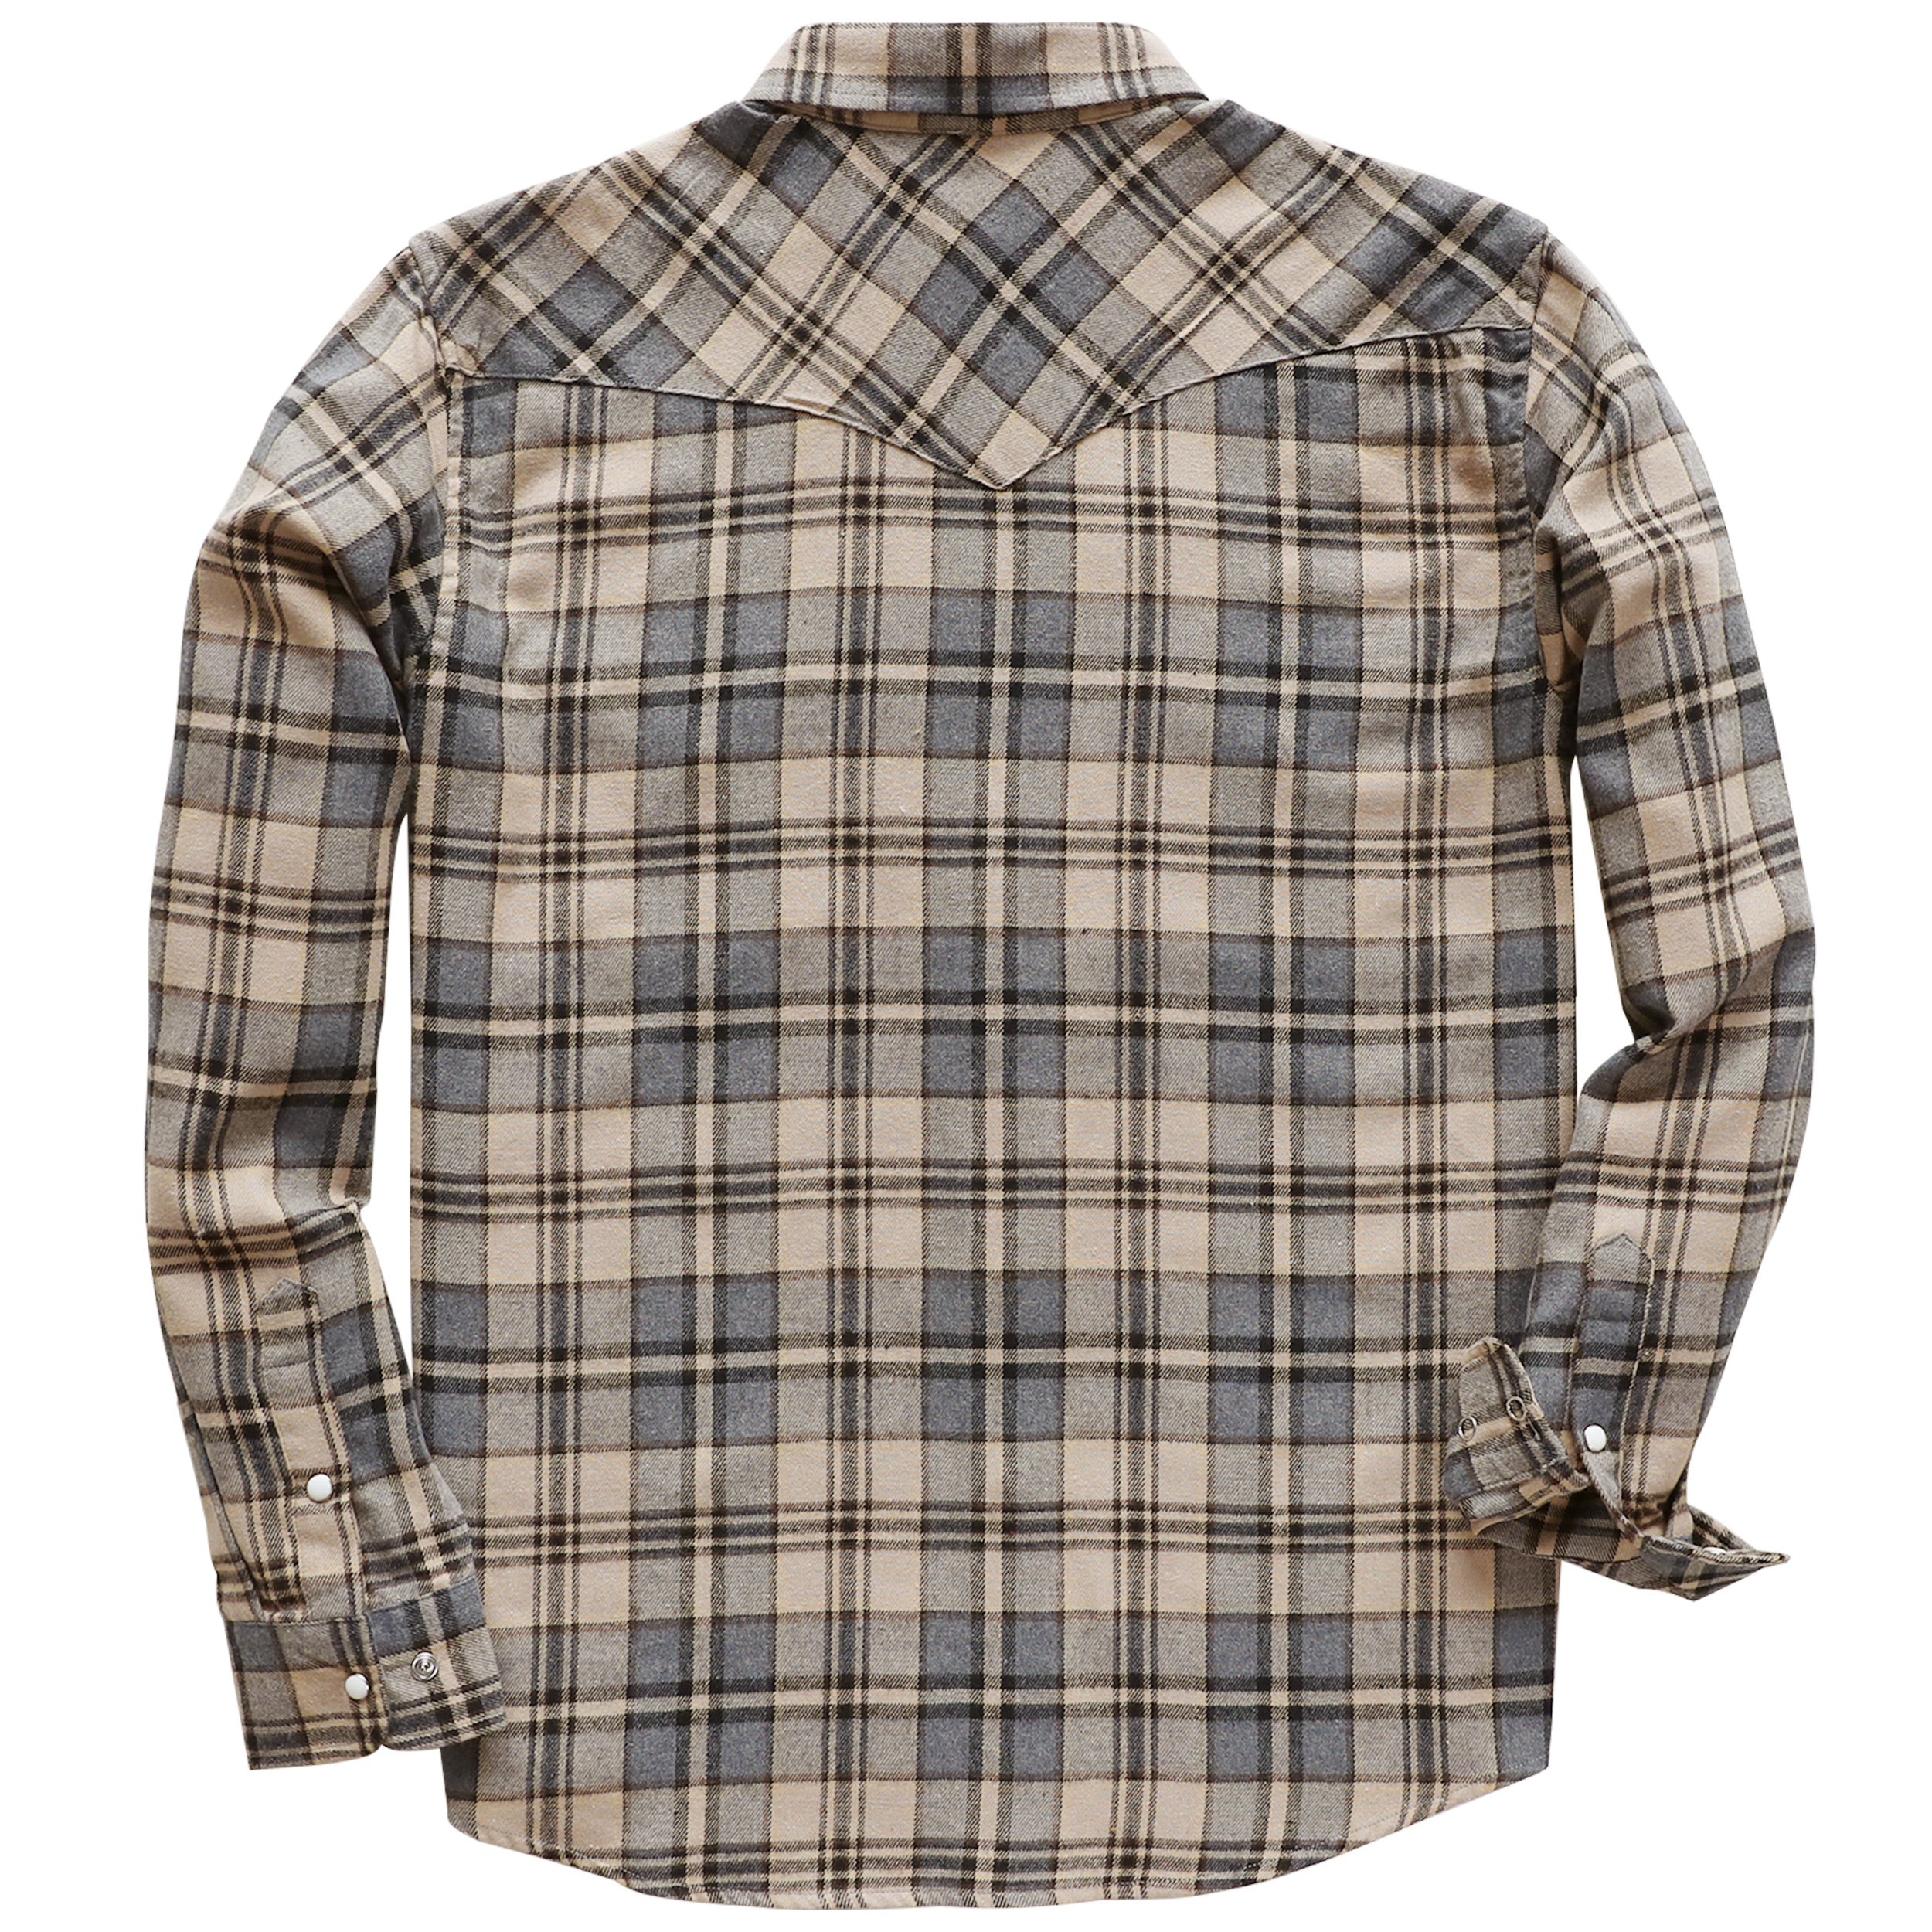 Dubinik® Flannel Shirt for Men Western Cowboy Pearl Snap Shirts for Men Long Sleeve Vintage Buttons Down Plaid Shirt #28901